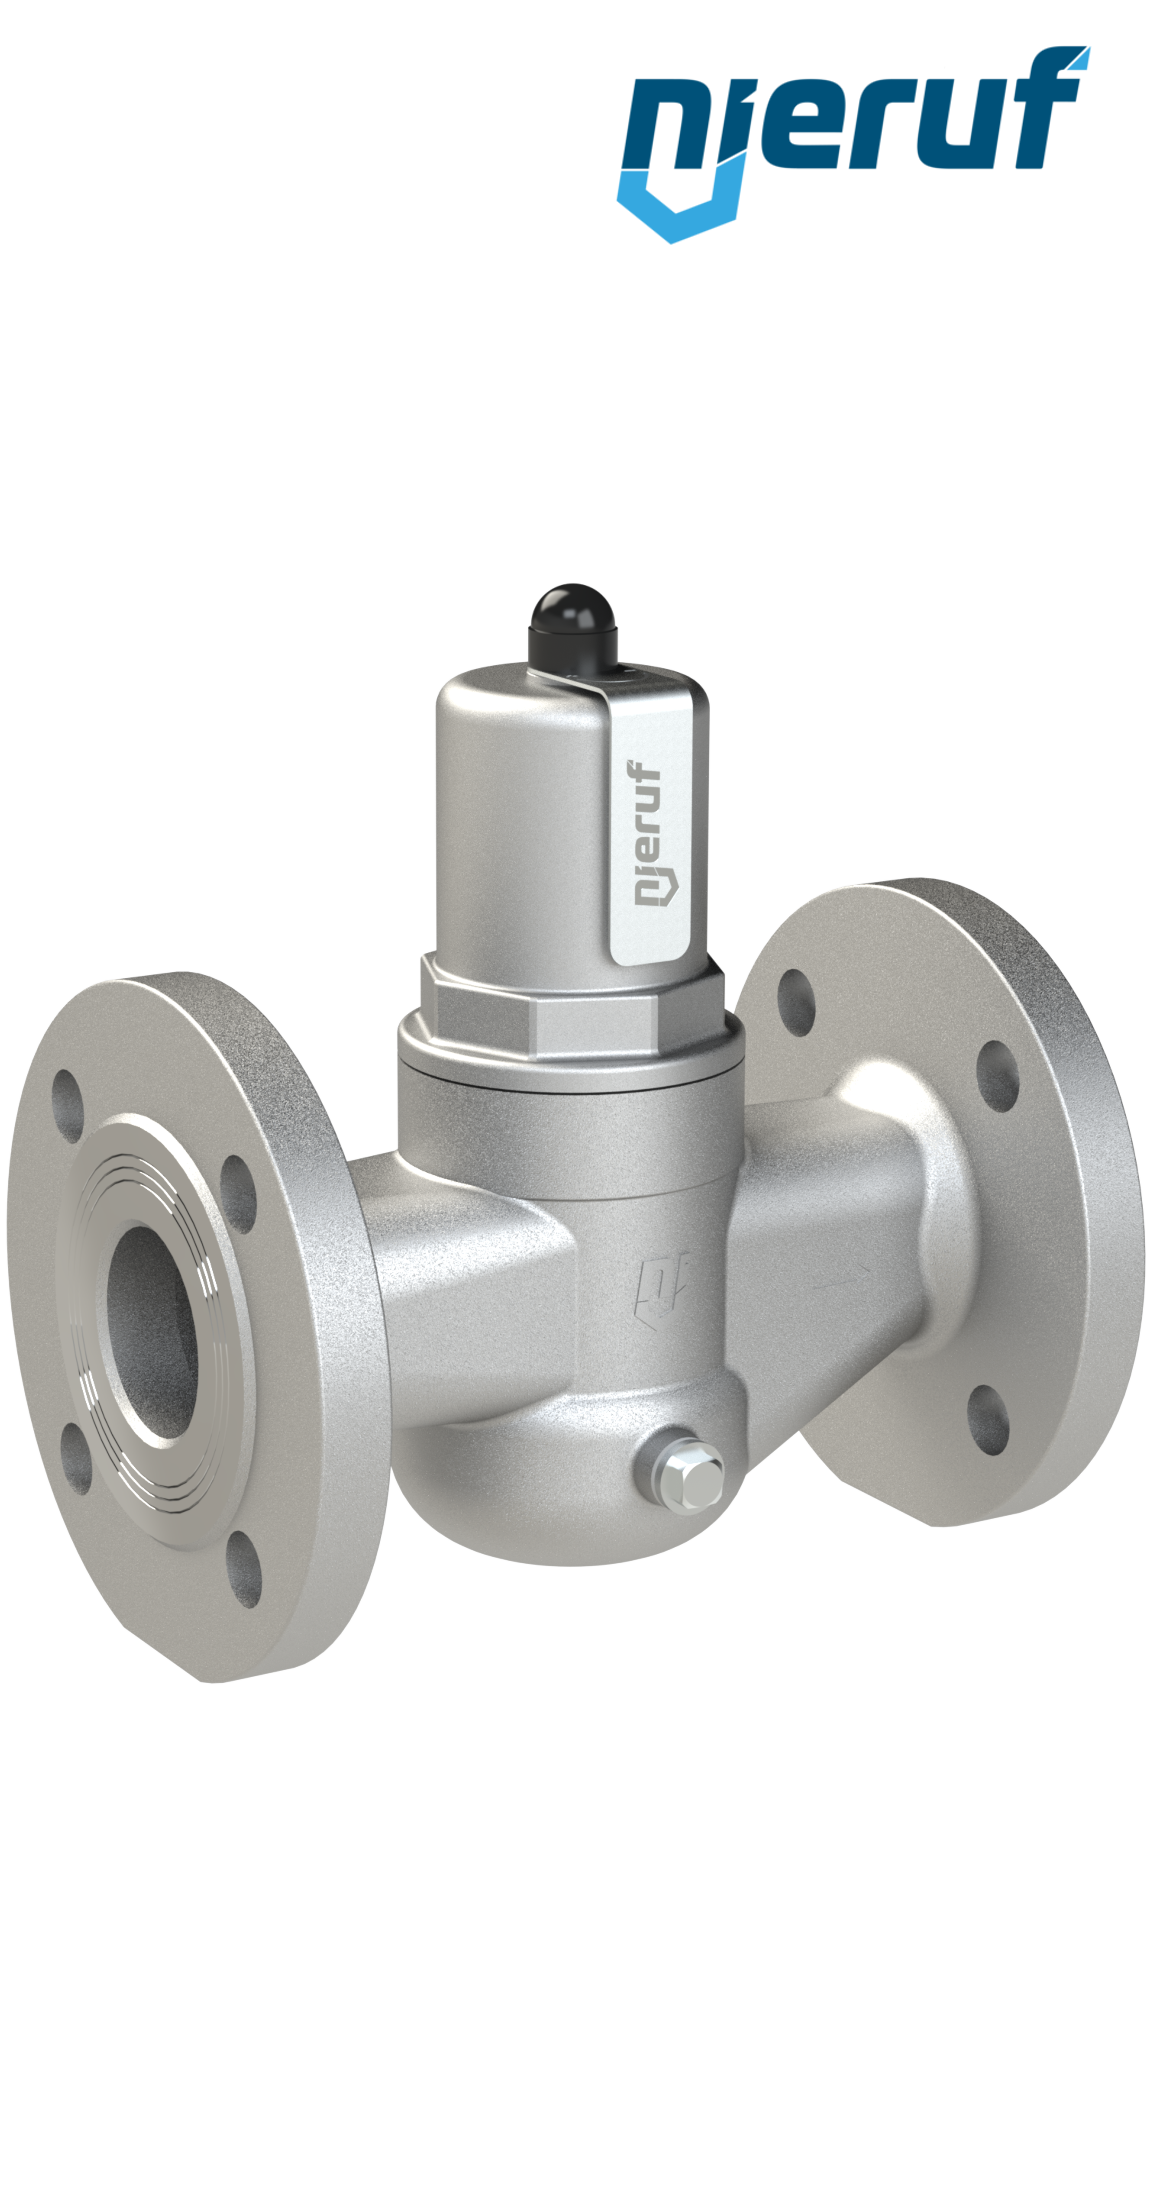 Flange-pressure reducing valve DN 25 PN40 DM07 stainless steel EPDM 5.0 - 15.0 bar